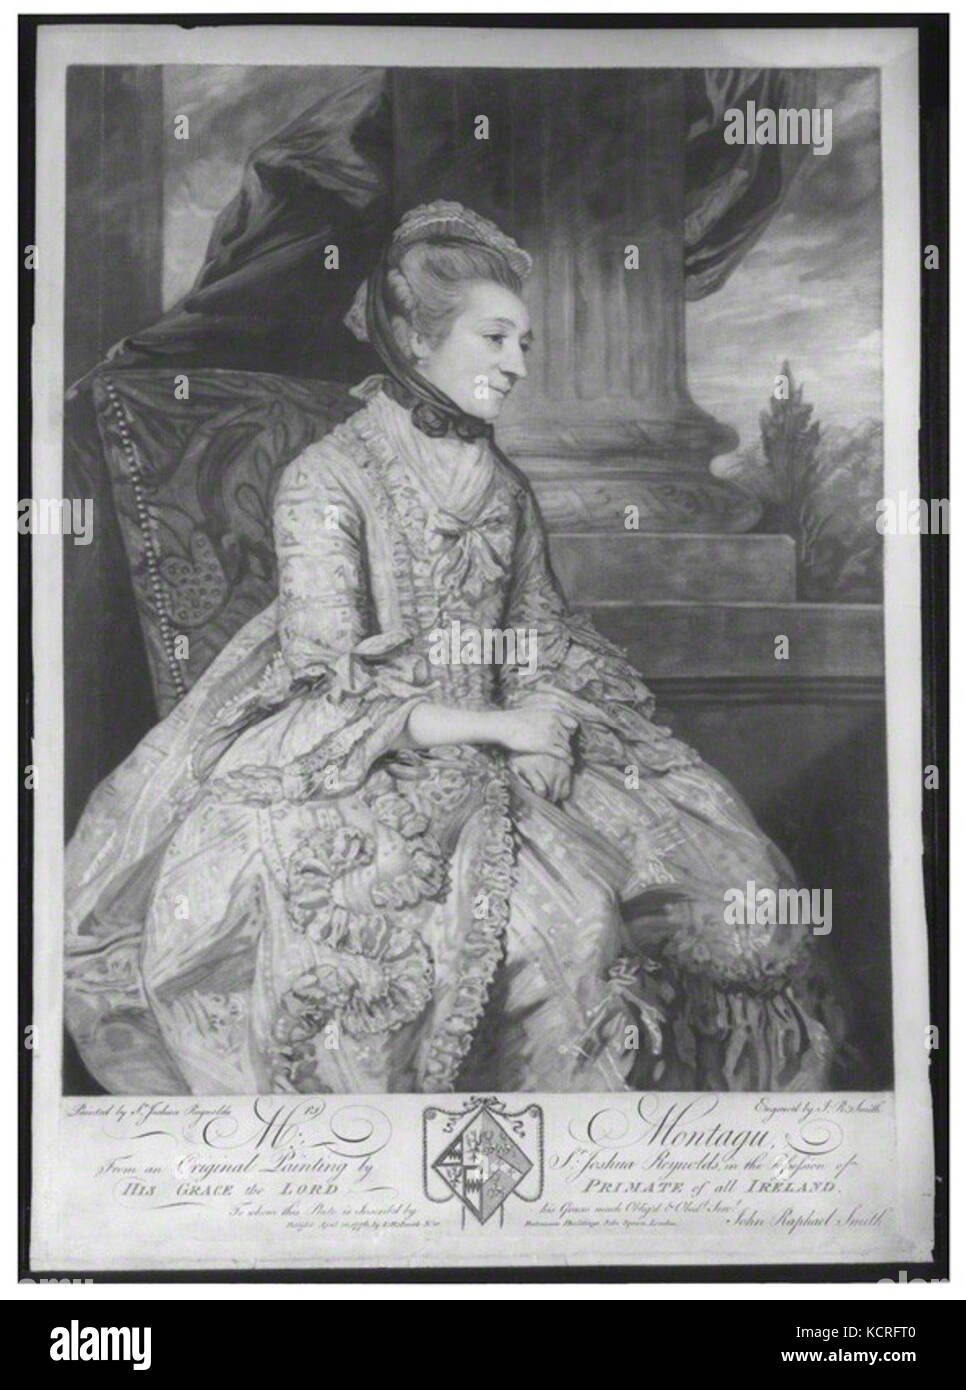 Elizabeth Montagu, John Raphael Smith after Joshua Reynolds, 10 April 1776, 20 x 14 inches, mezzotint Stock Photo